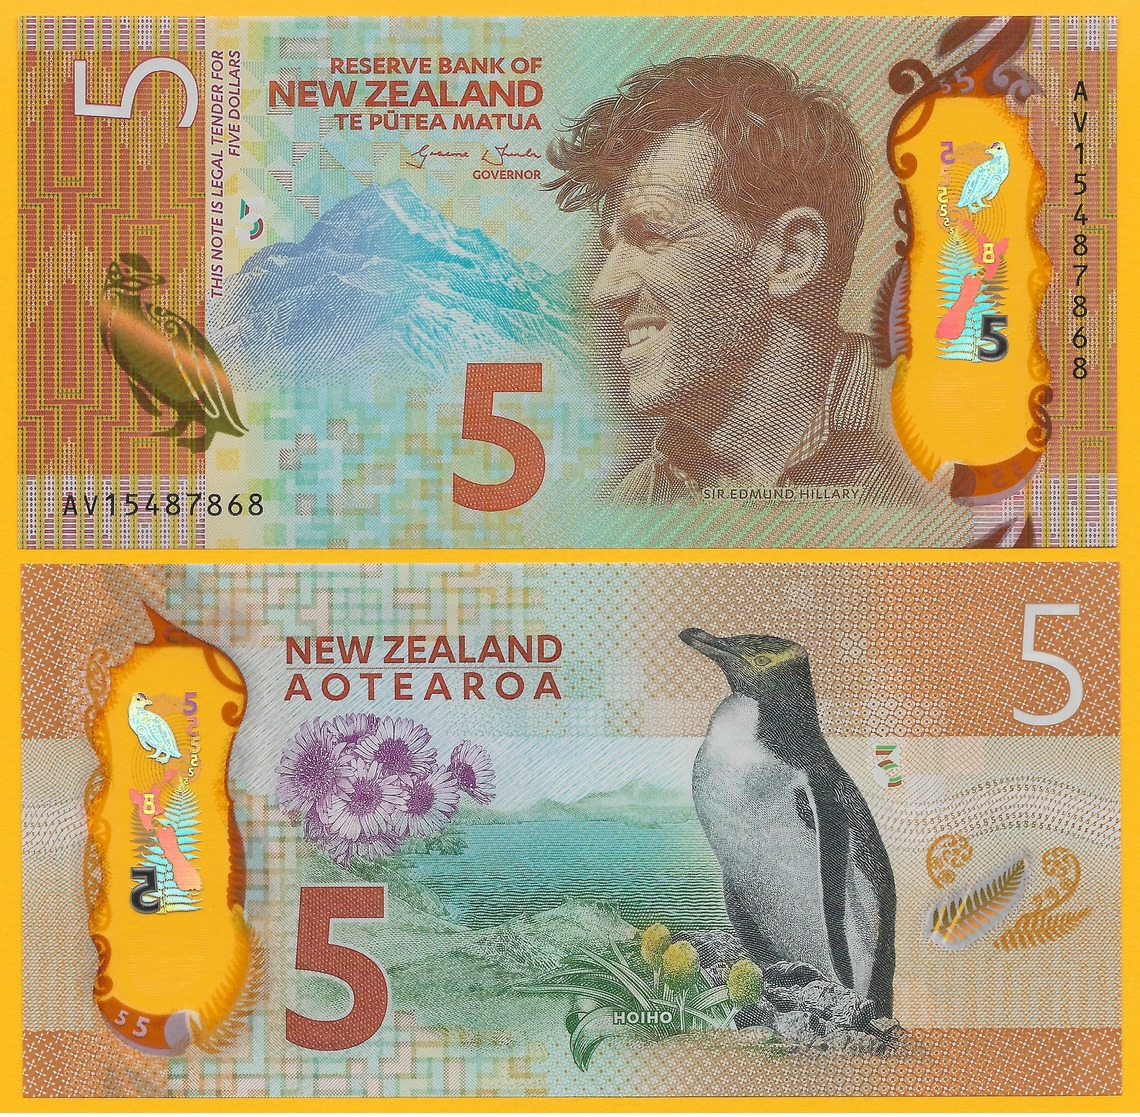 New Zealand 5 Dollars P-191 2015 UNC Polymer Banknote - New Zealand